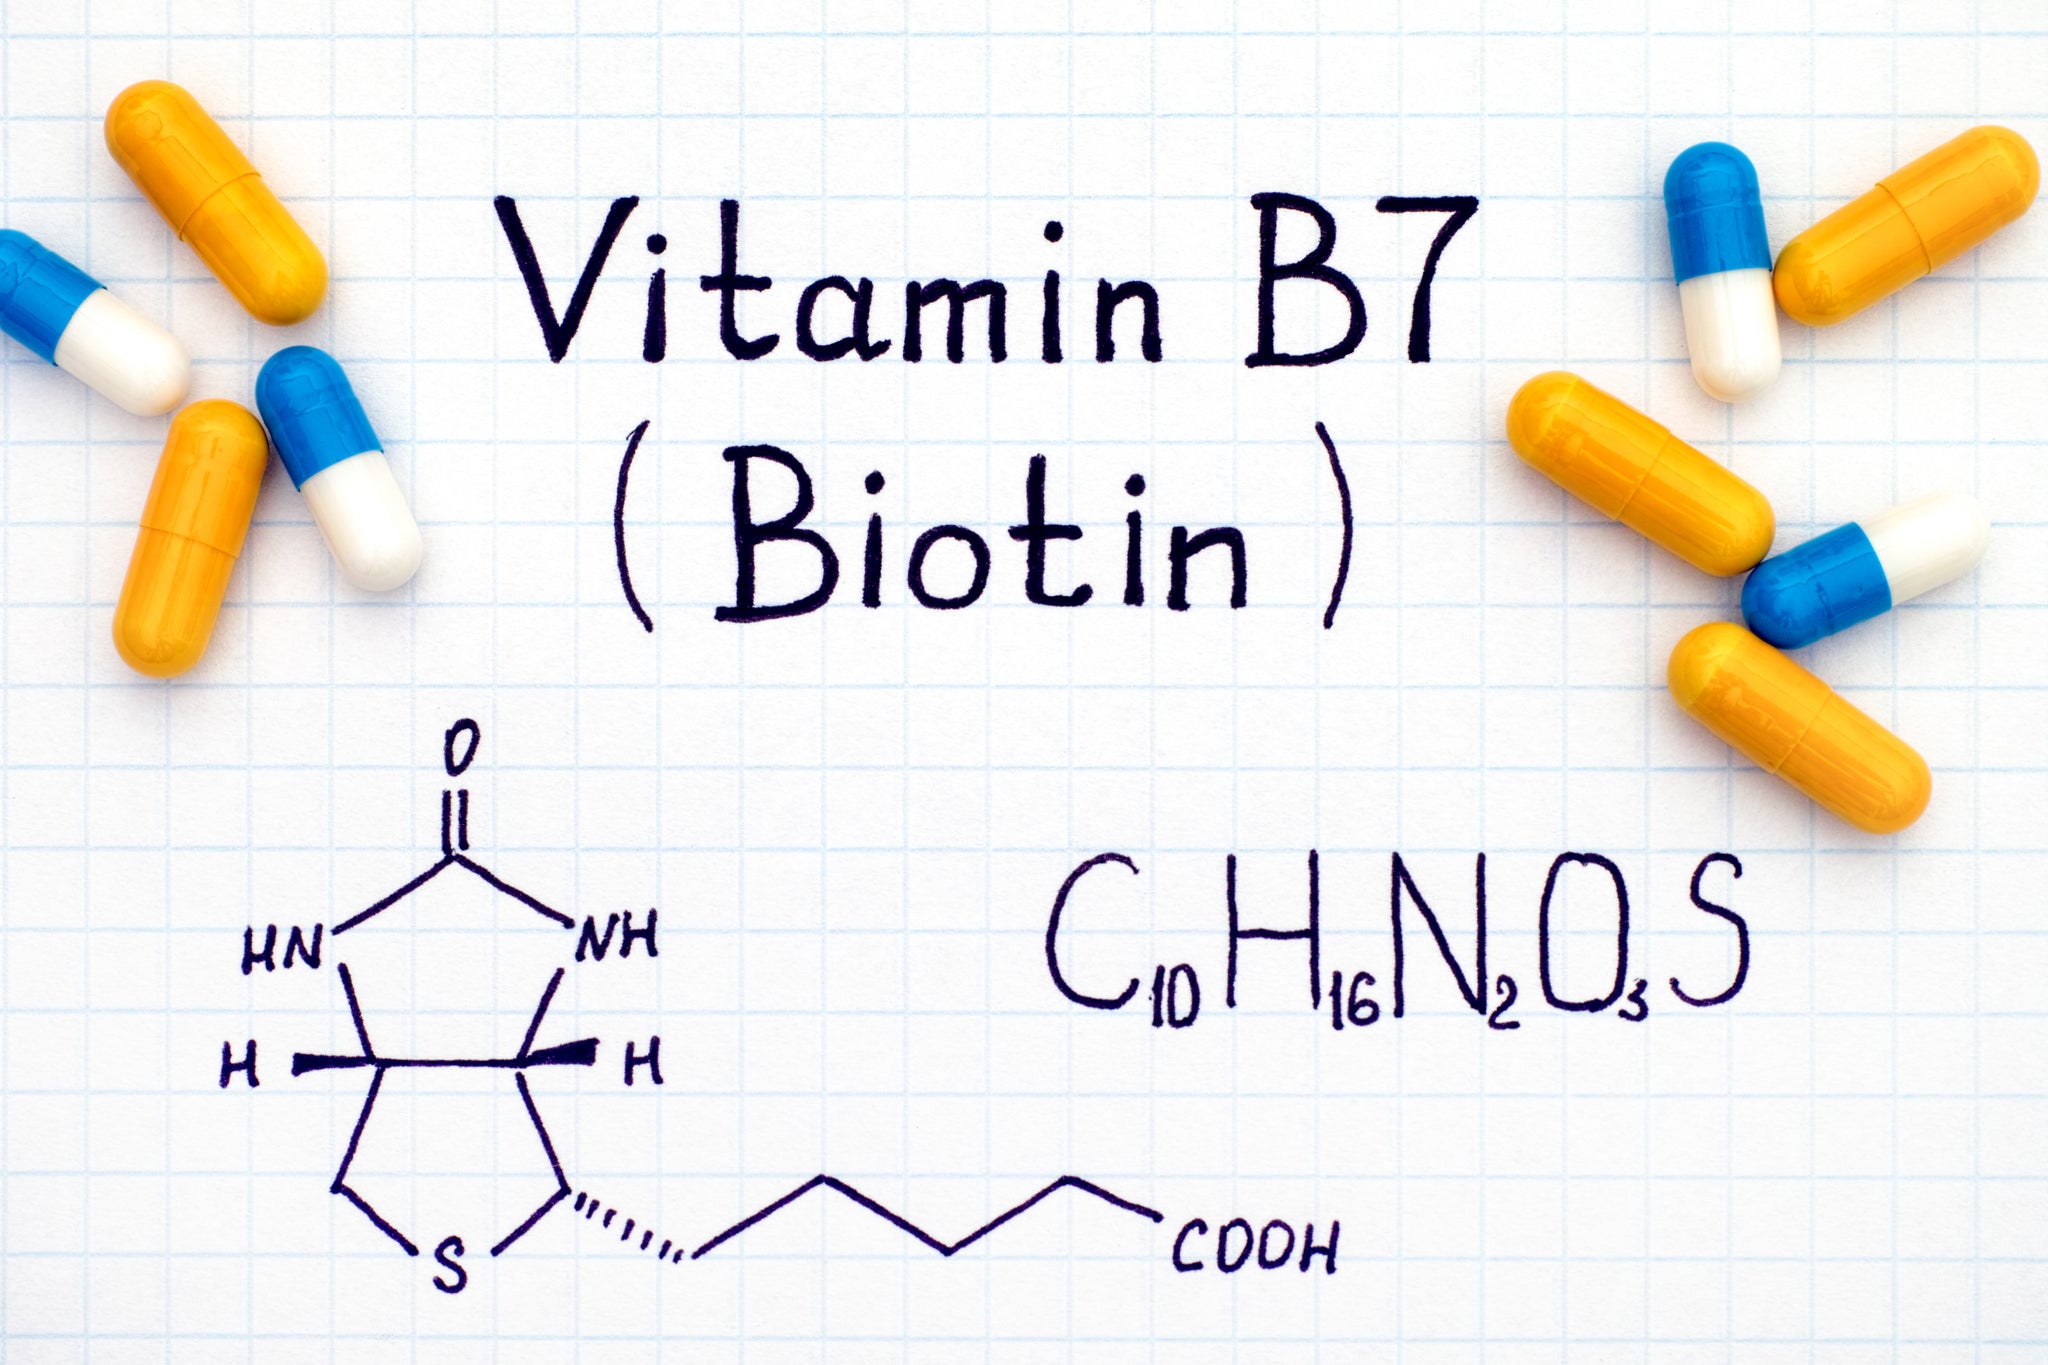 Does Biotin Help Hair Growth?